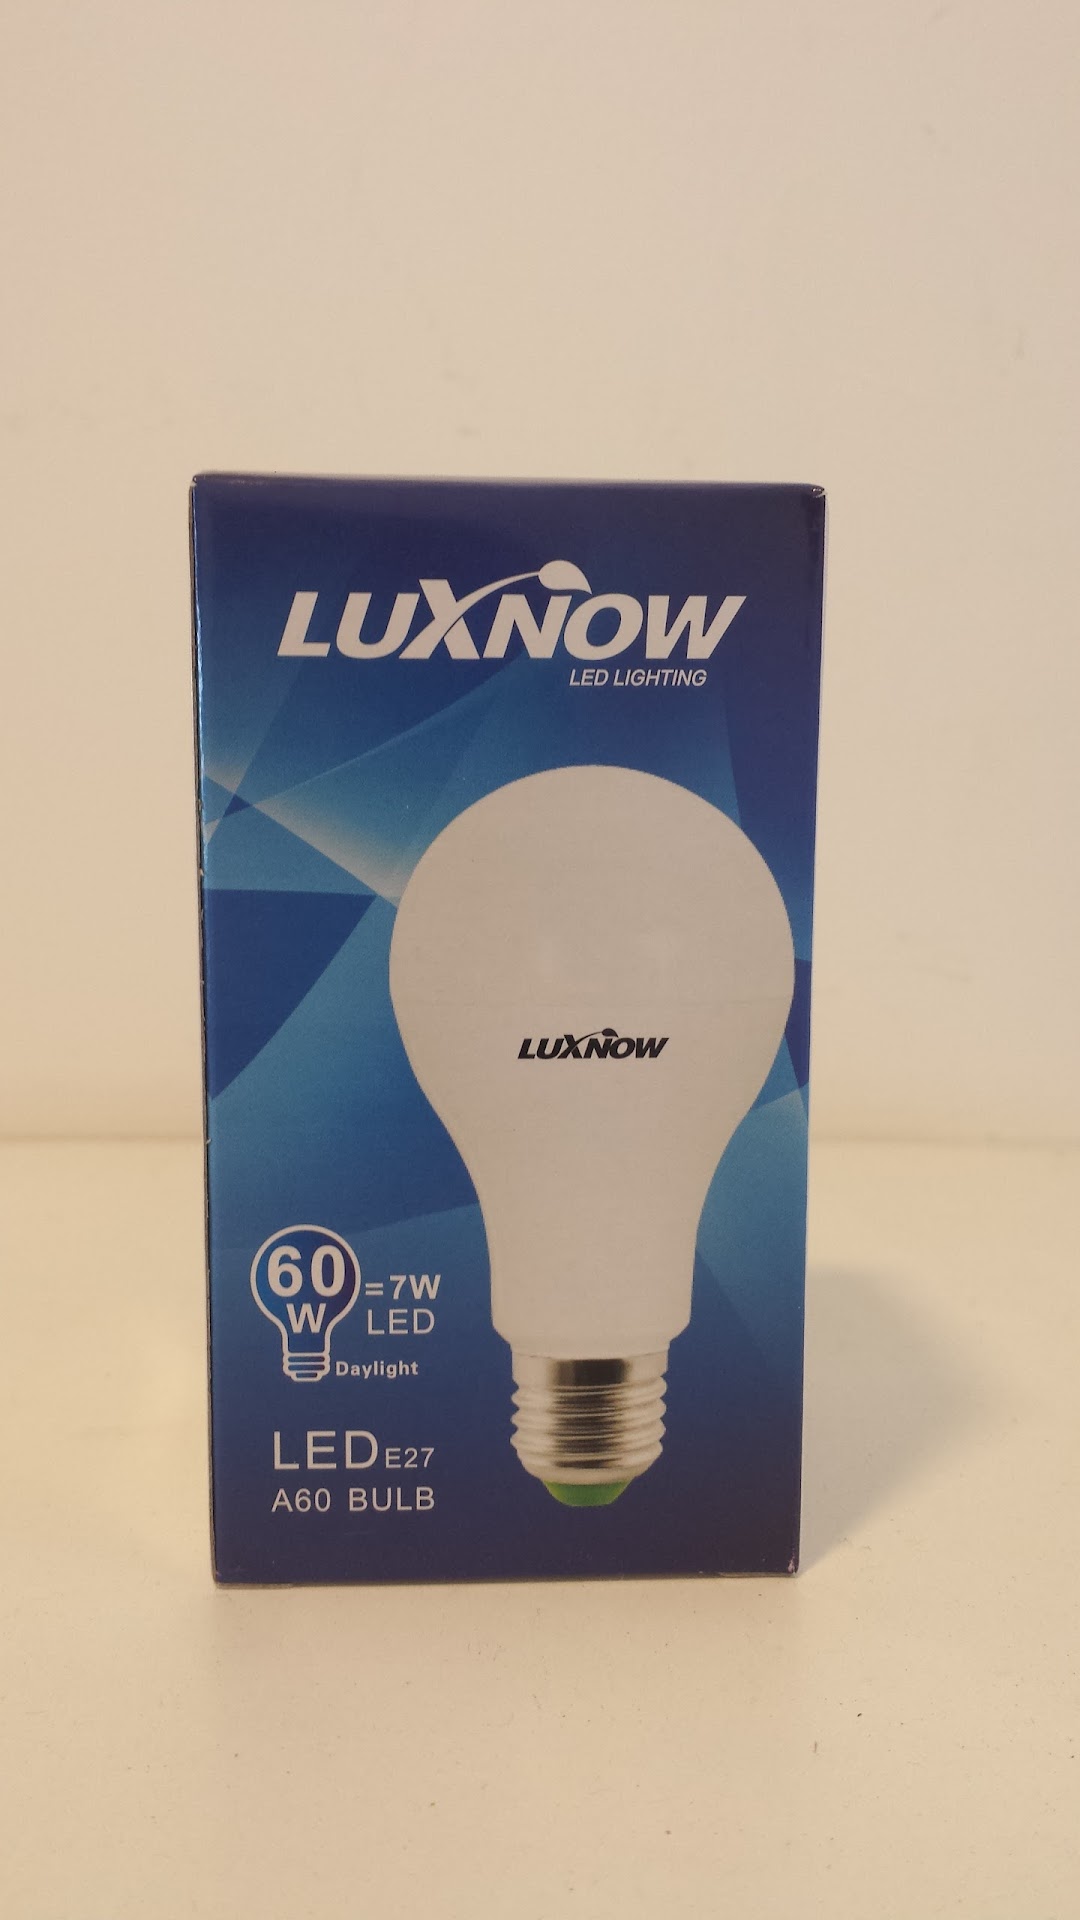 LuxNow Led Lighting